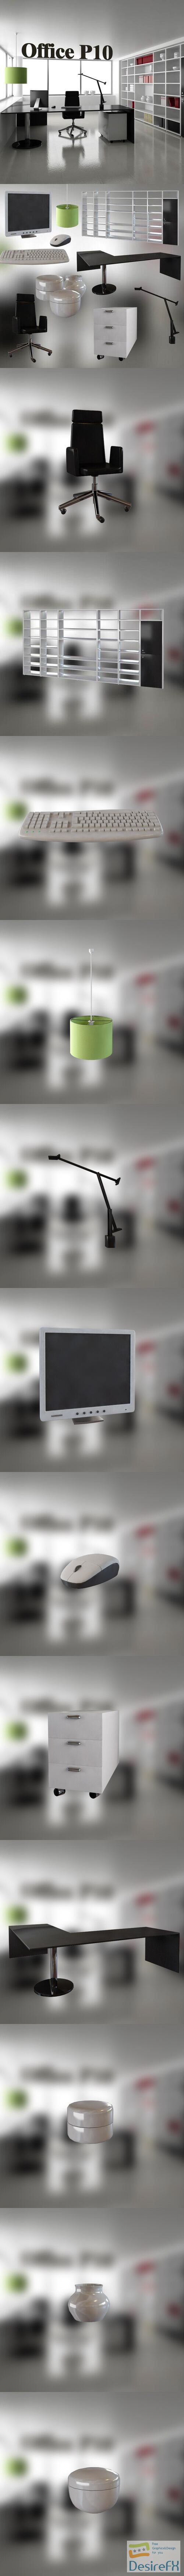 Office Set P10 3D Model